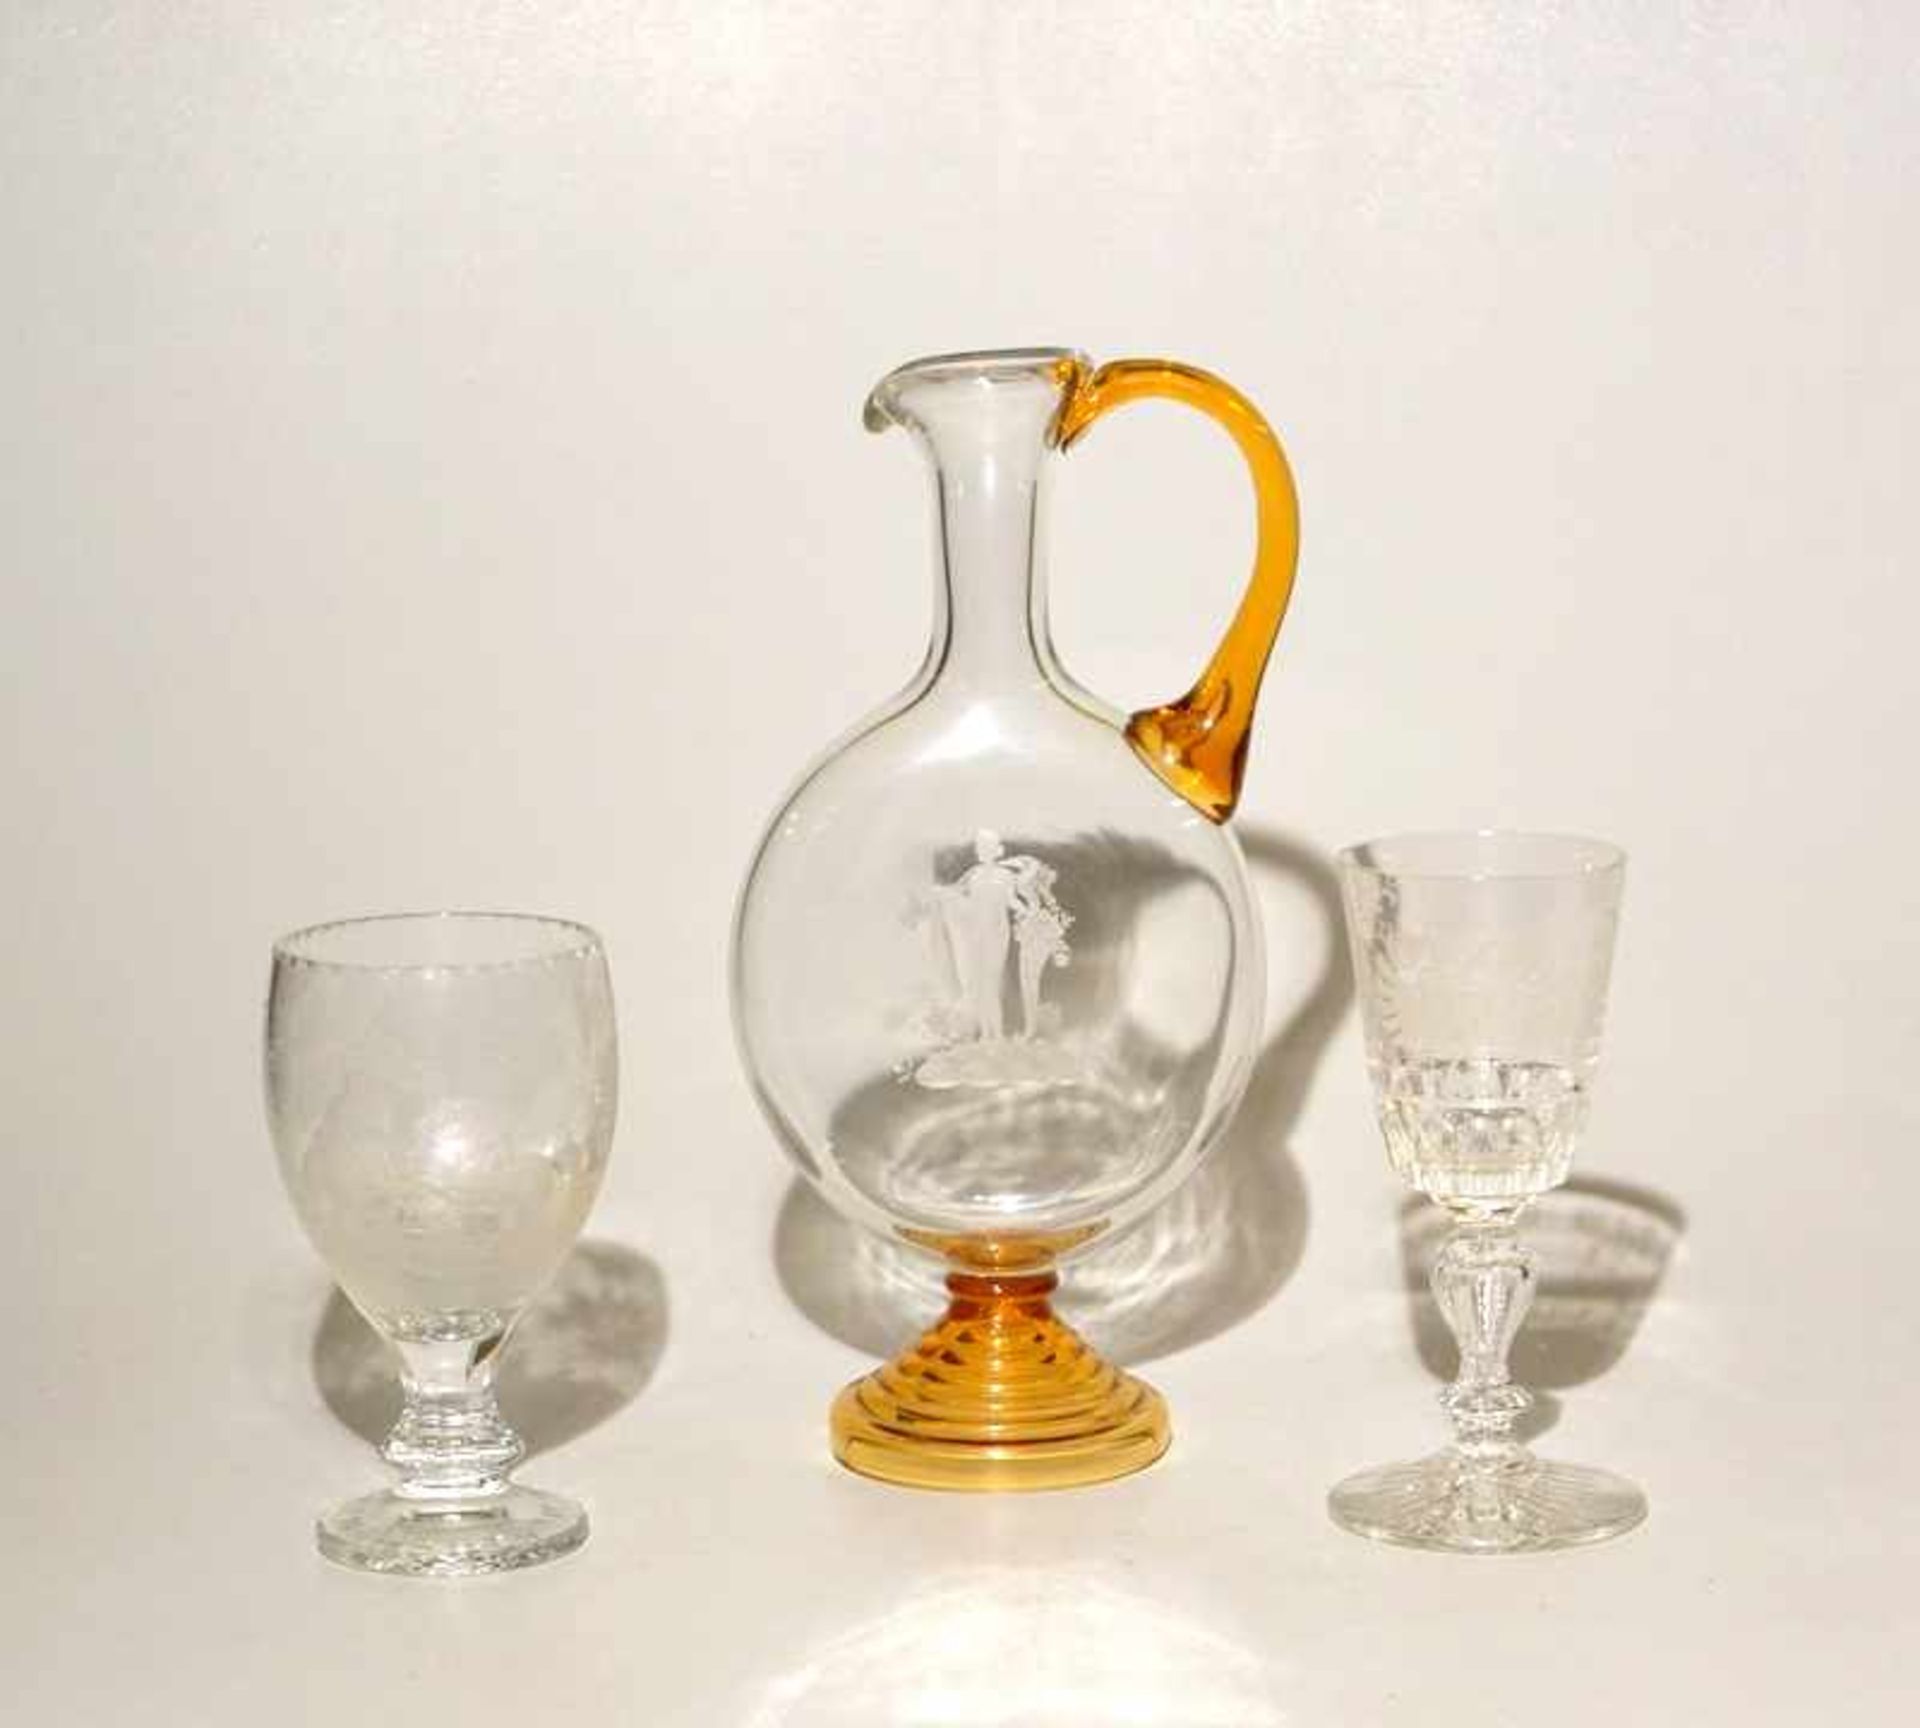 Rosenthal, Kristall: Konvolut Sammlerglas, u. A. Deckelpokal nach barockem Vorbild5-teilig, - Image 2 of 2